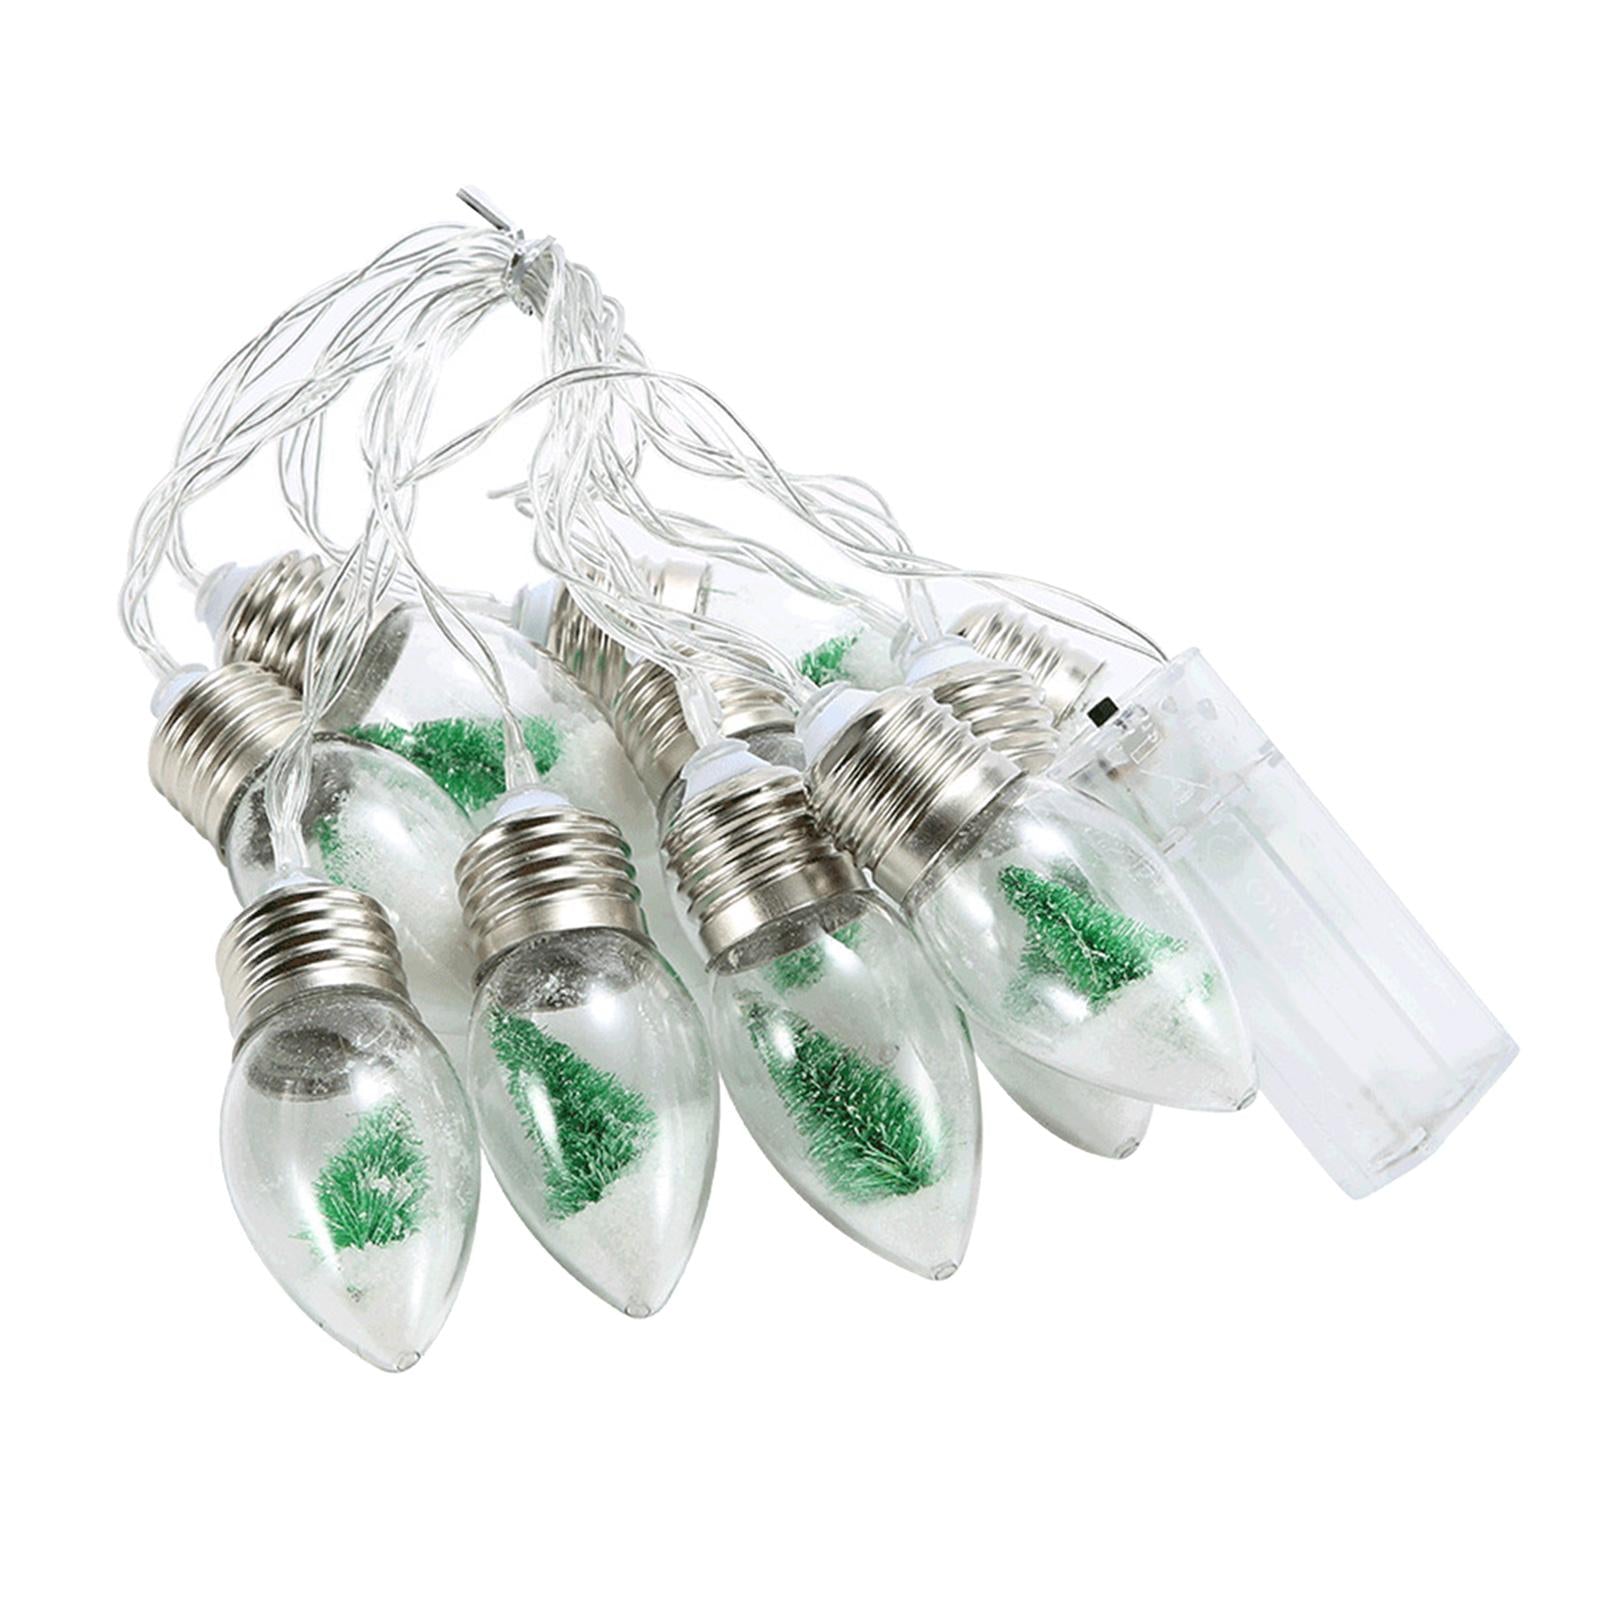 10 LED Wine Bottle Light String Fairy Wire Night Light for Home Wedding 2m